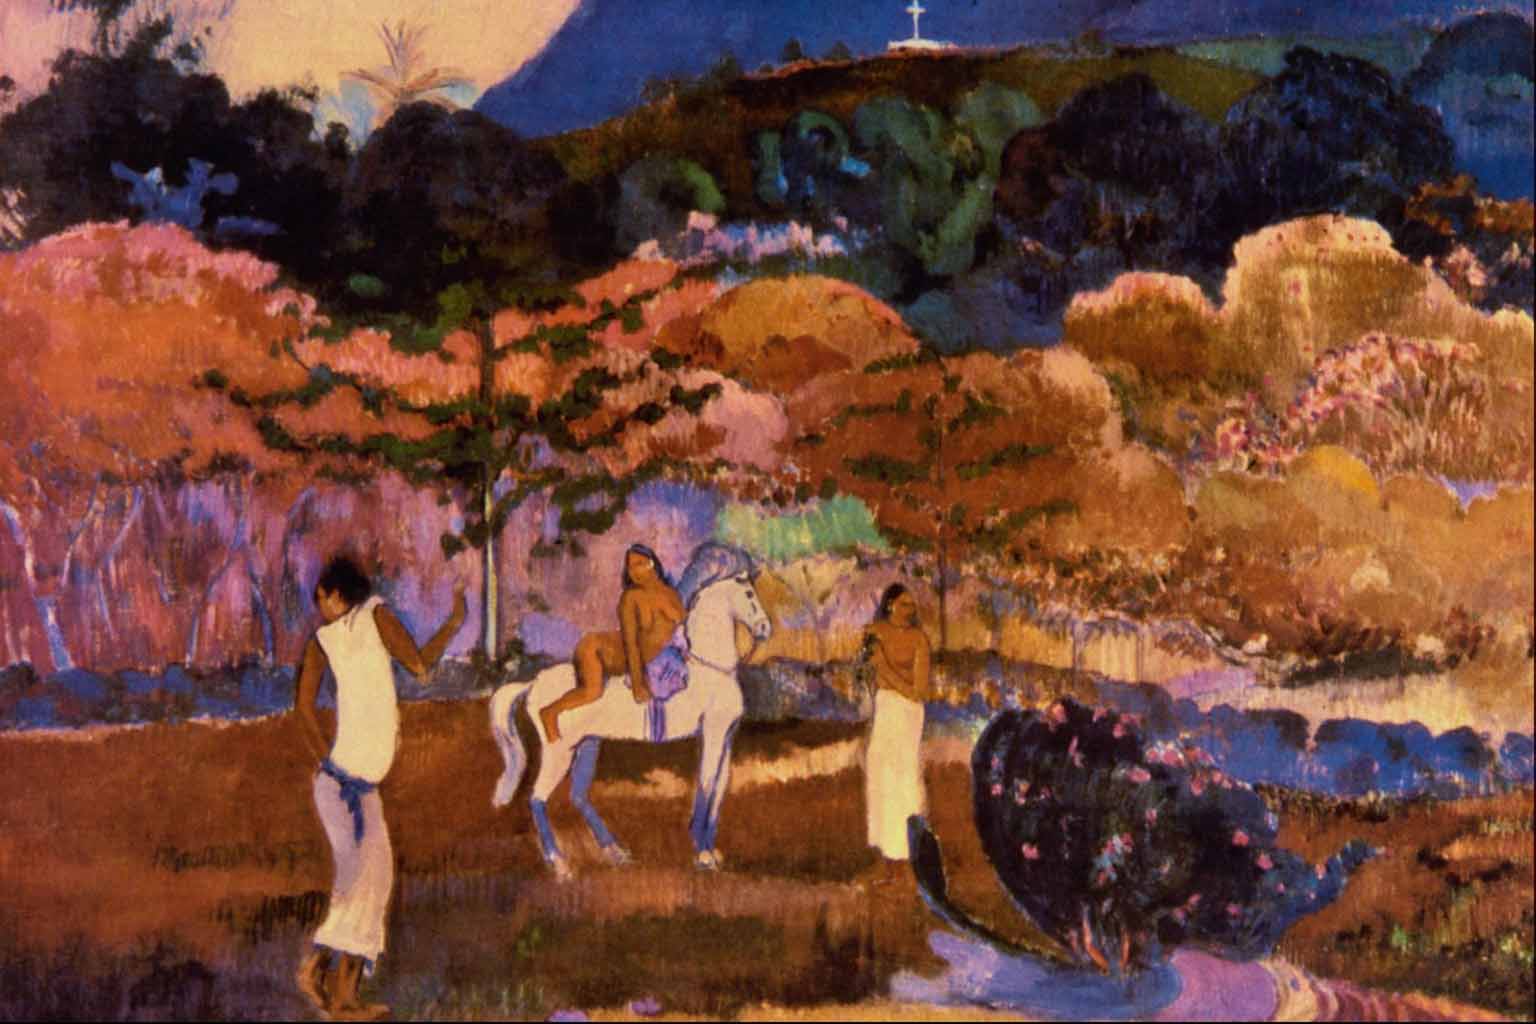 Поль Гоген (Paul Gauguin) “Women and white horse“